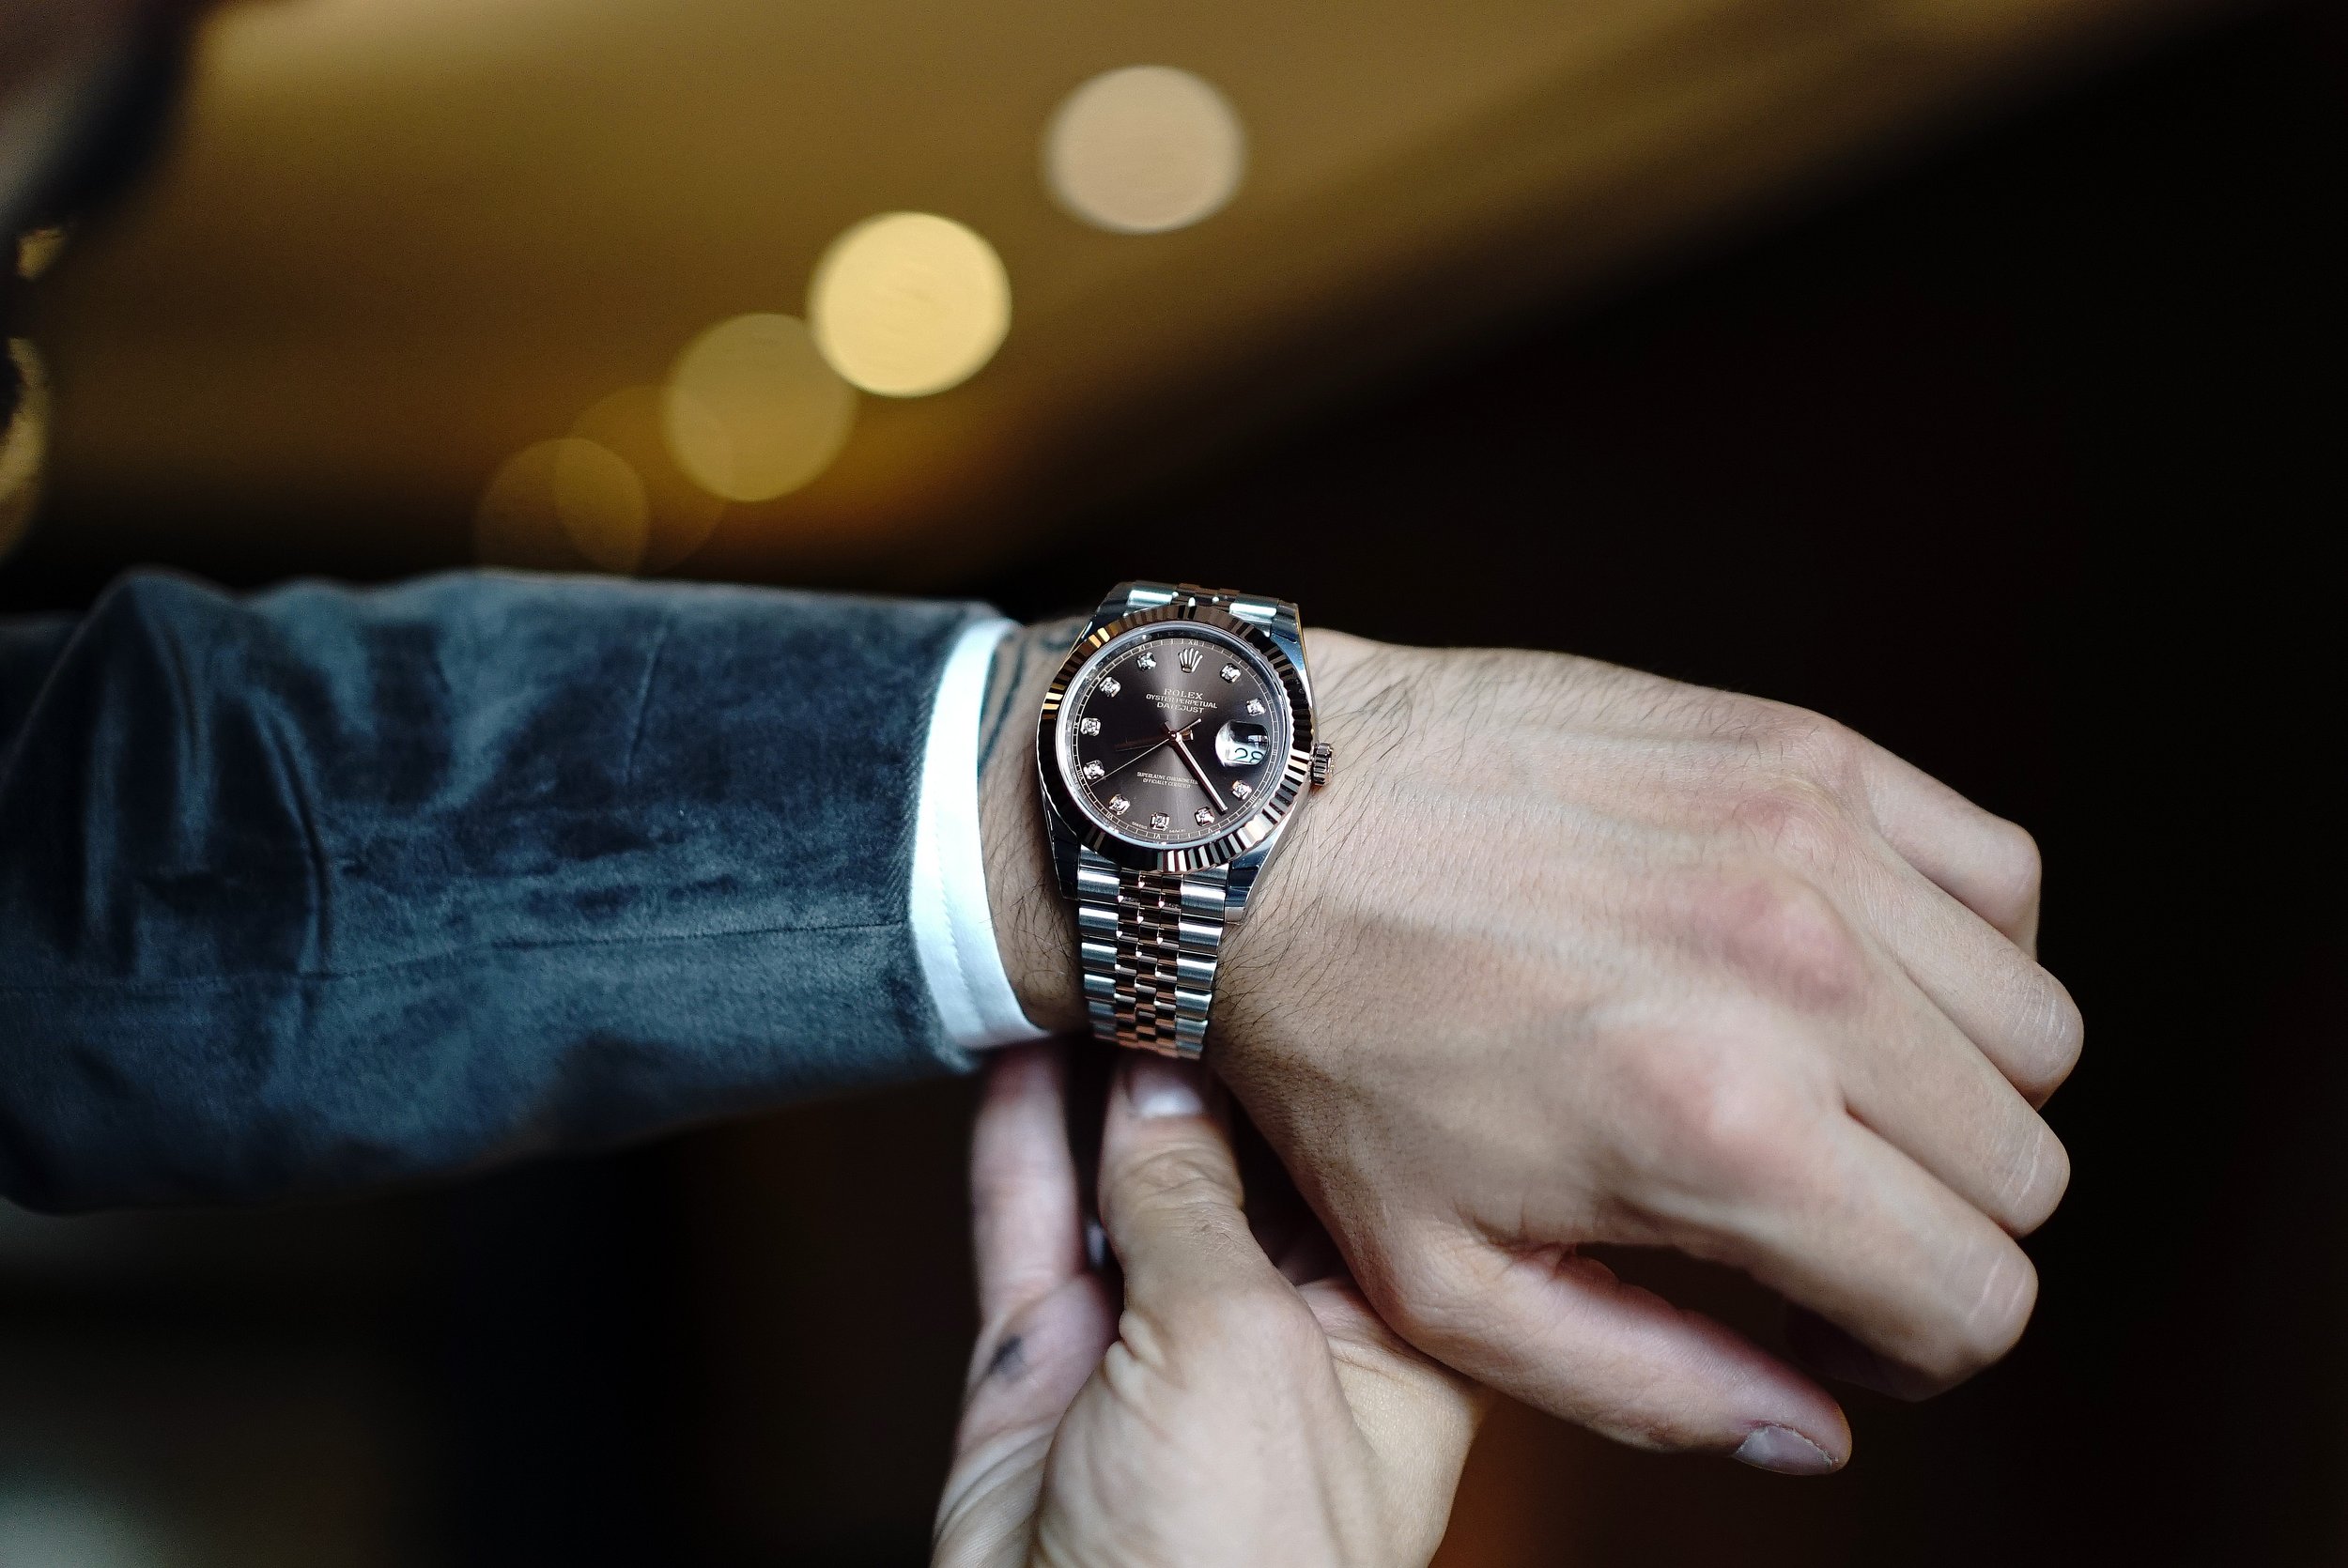 Rolex: The ideal watch brand for women? - Chrono24 Magazine